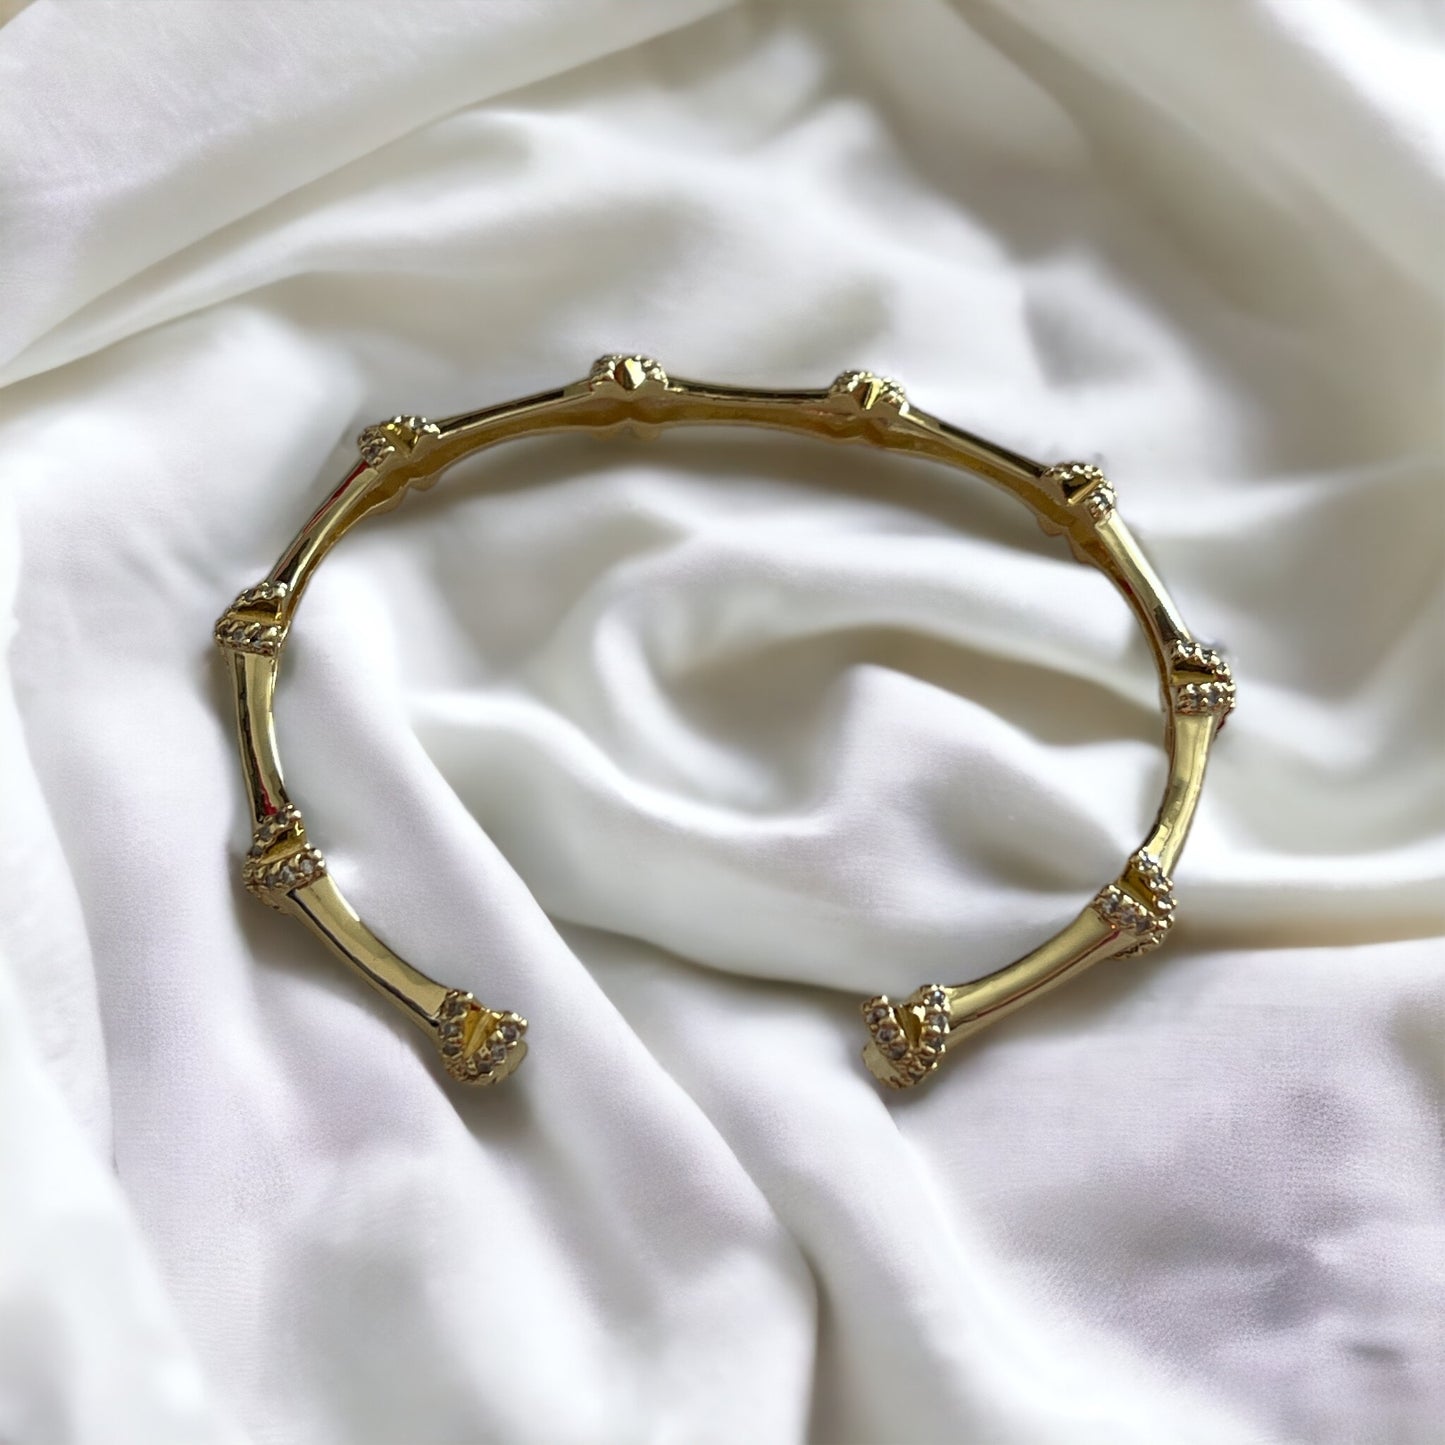 Bracelet - Golden minimalist